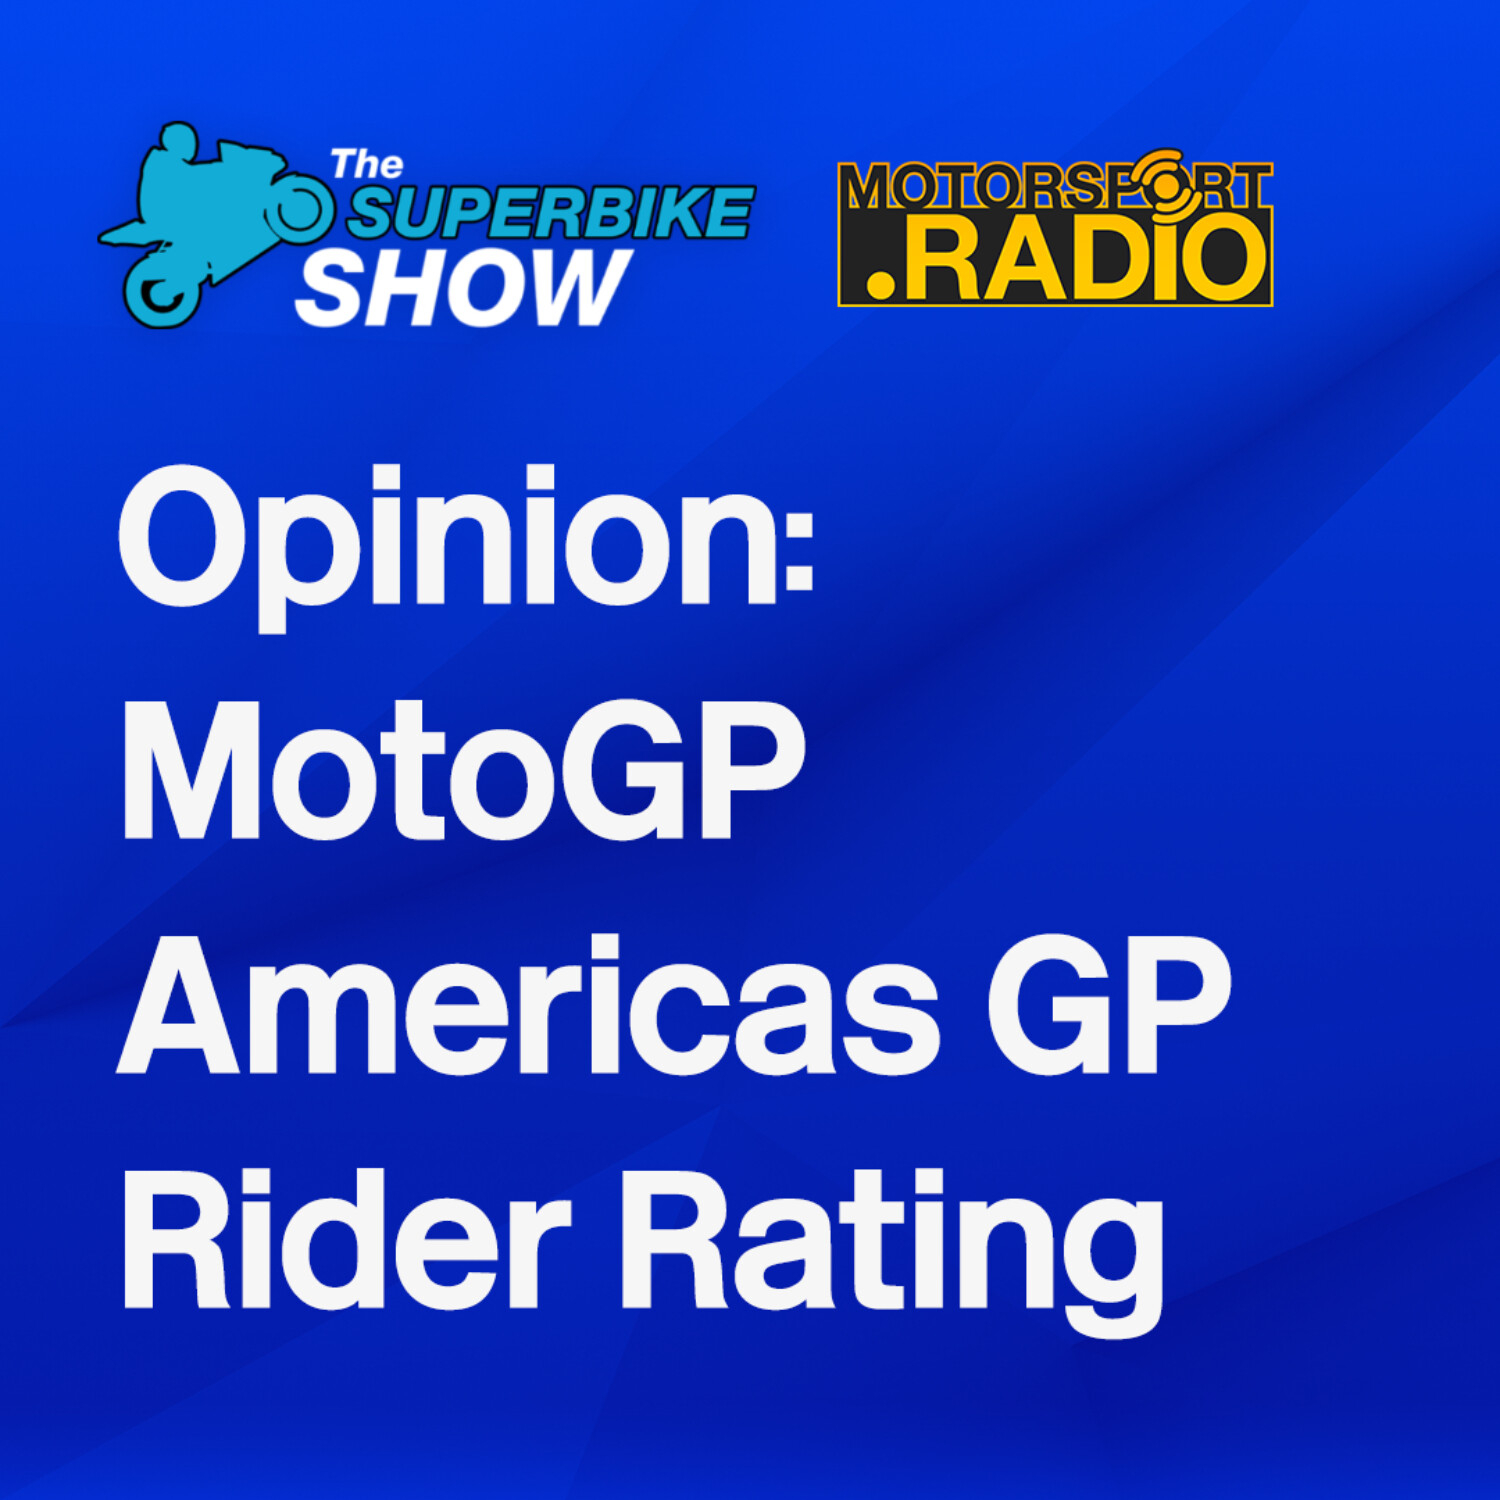 Opinion: #MotoGP #AmericasGP Luke's Rider Rating and REACTION